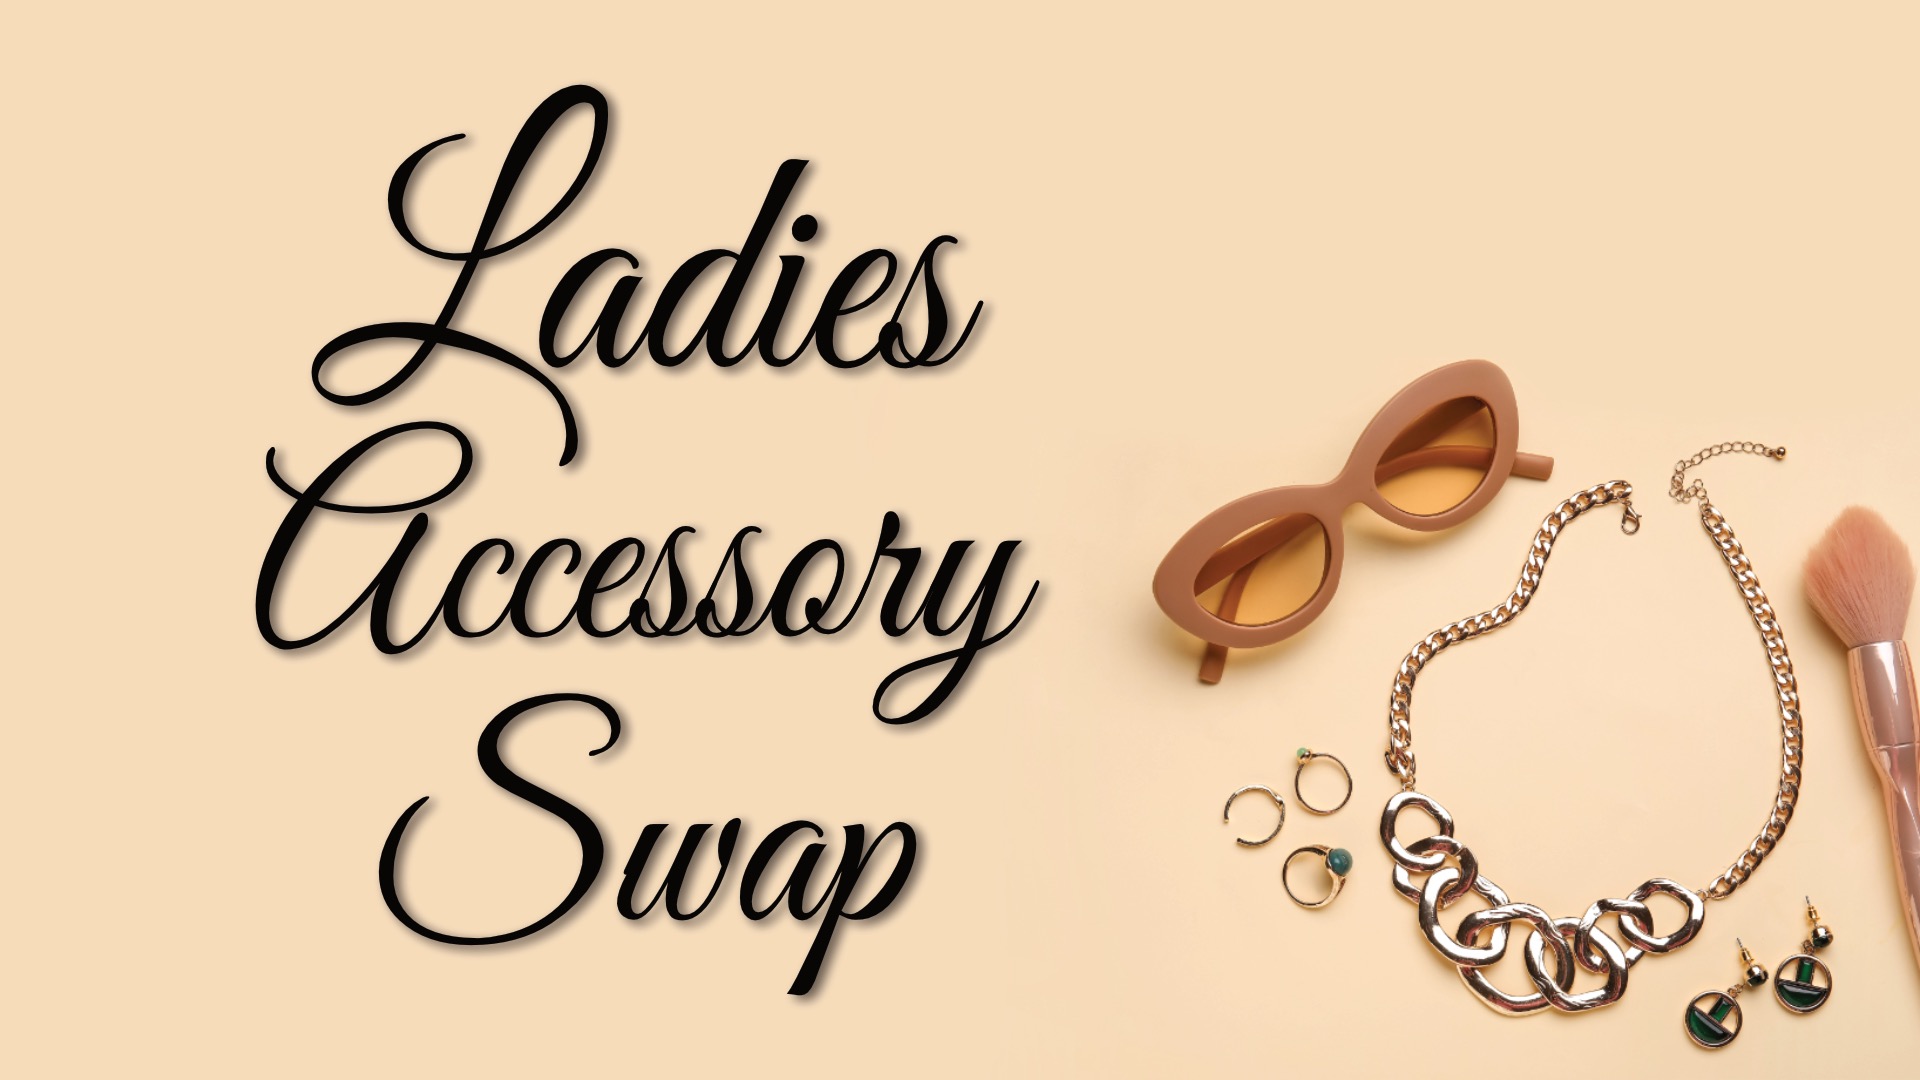 Ladies Accessory Swap